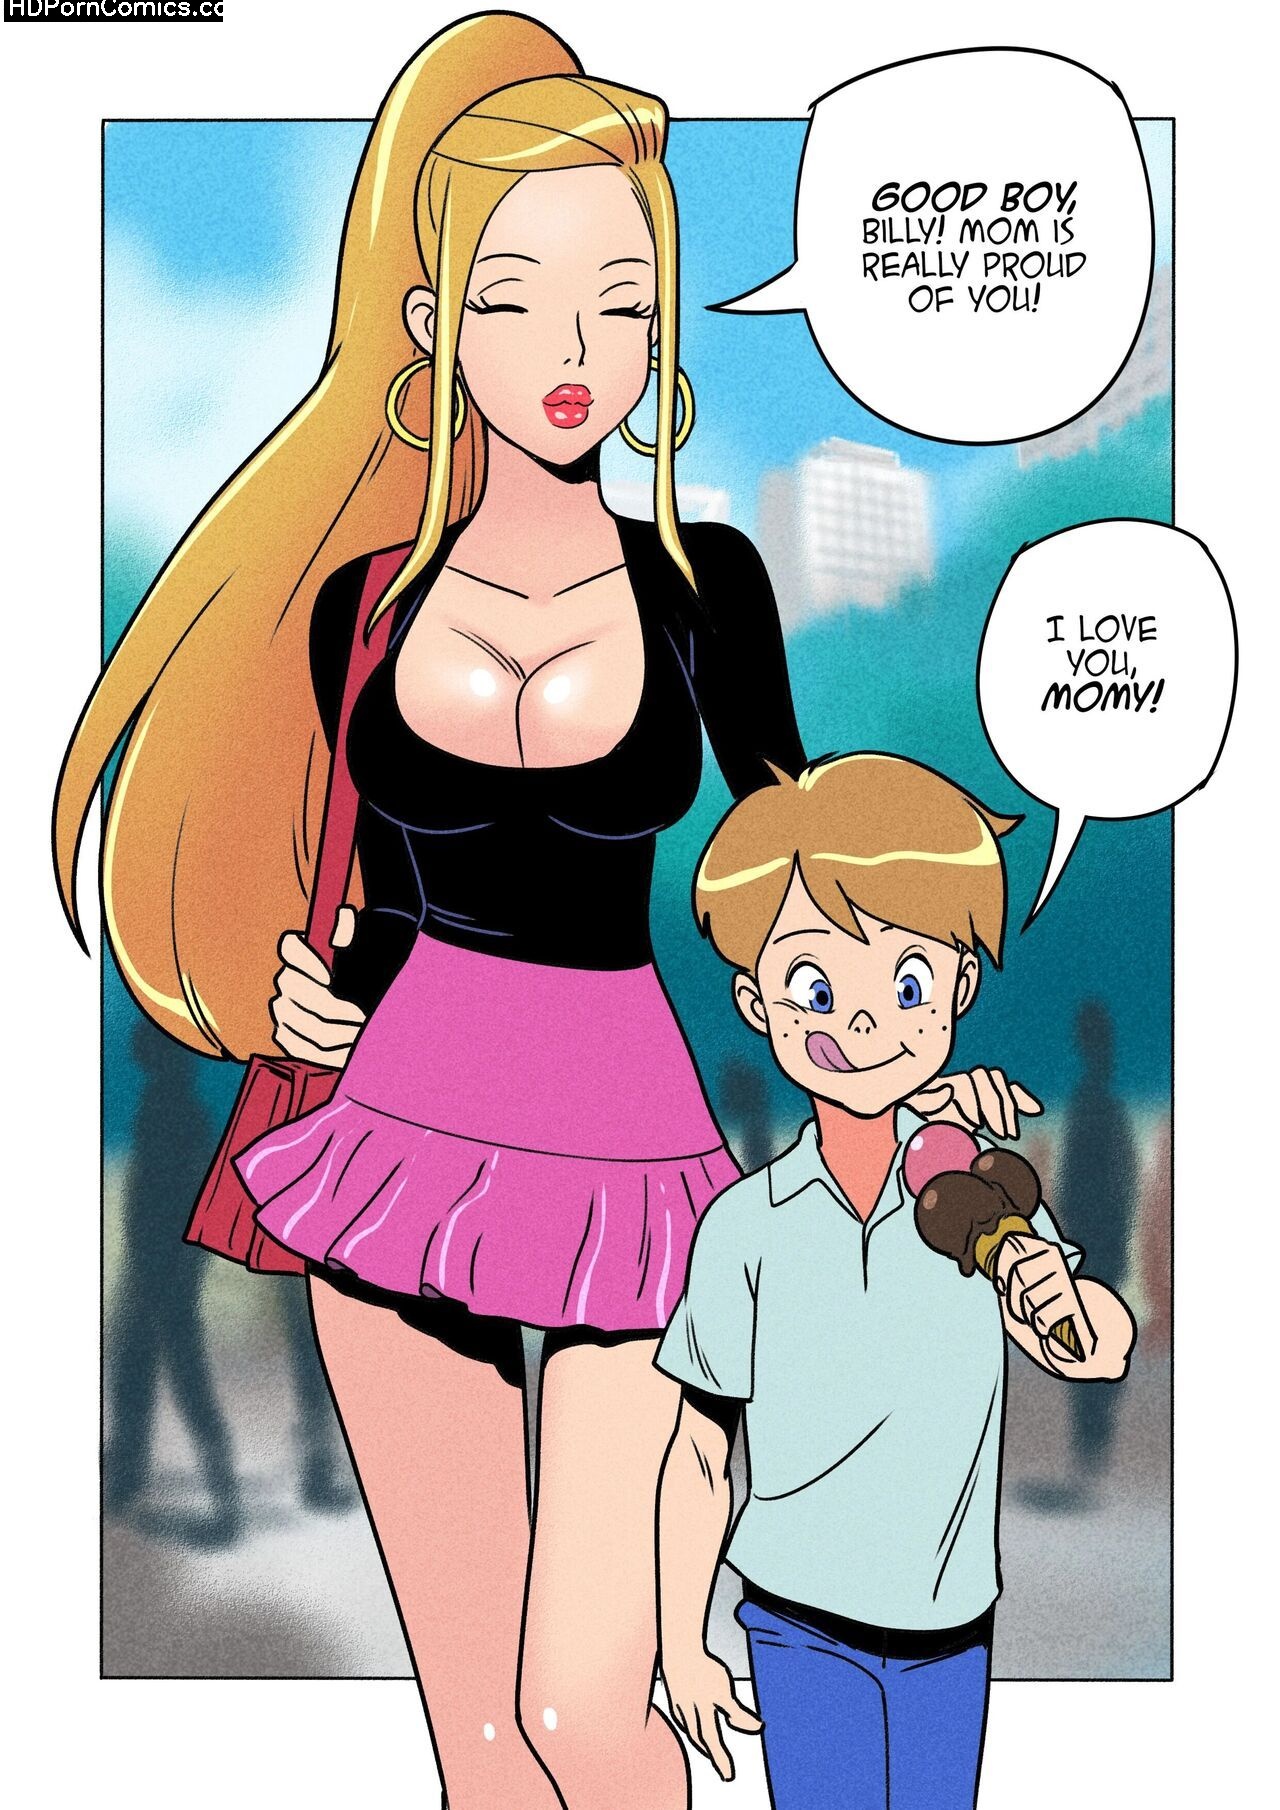 My Mom Cartoon Sex - Don't Mess With My Mom! comic porn | HD Porn Comics